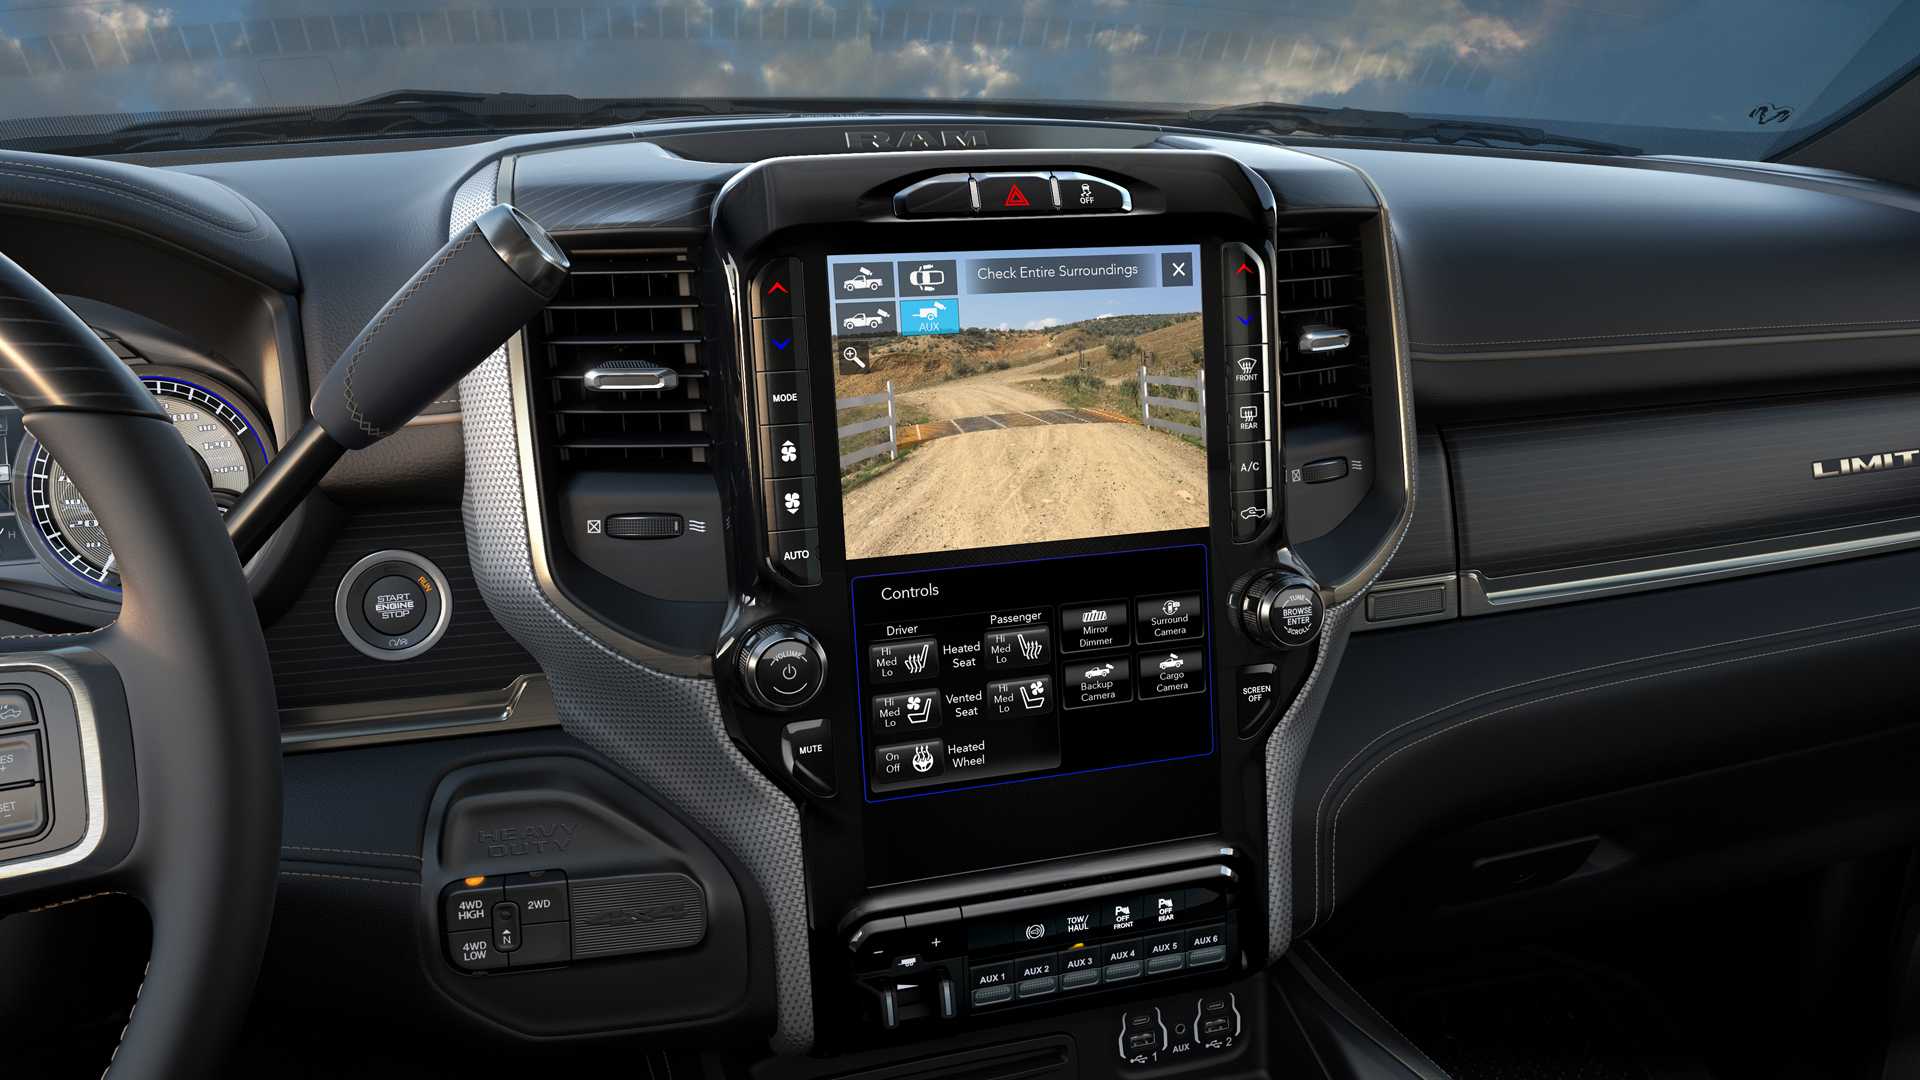 2019-ram-chassis-cab-interior (3)